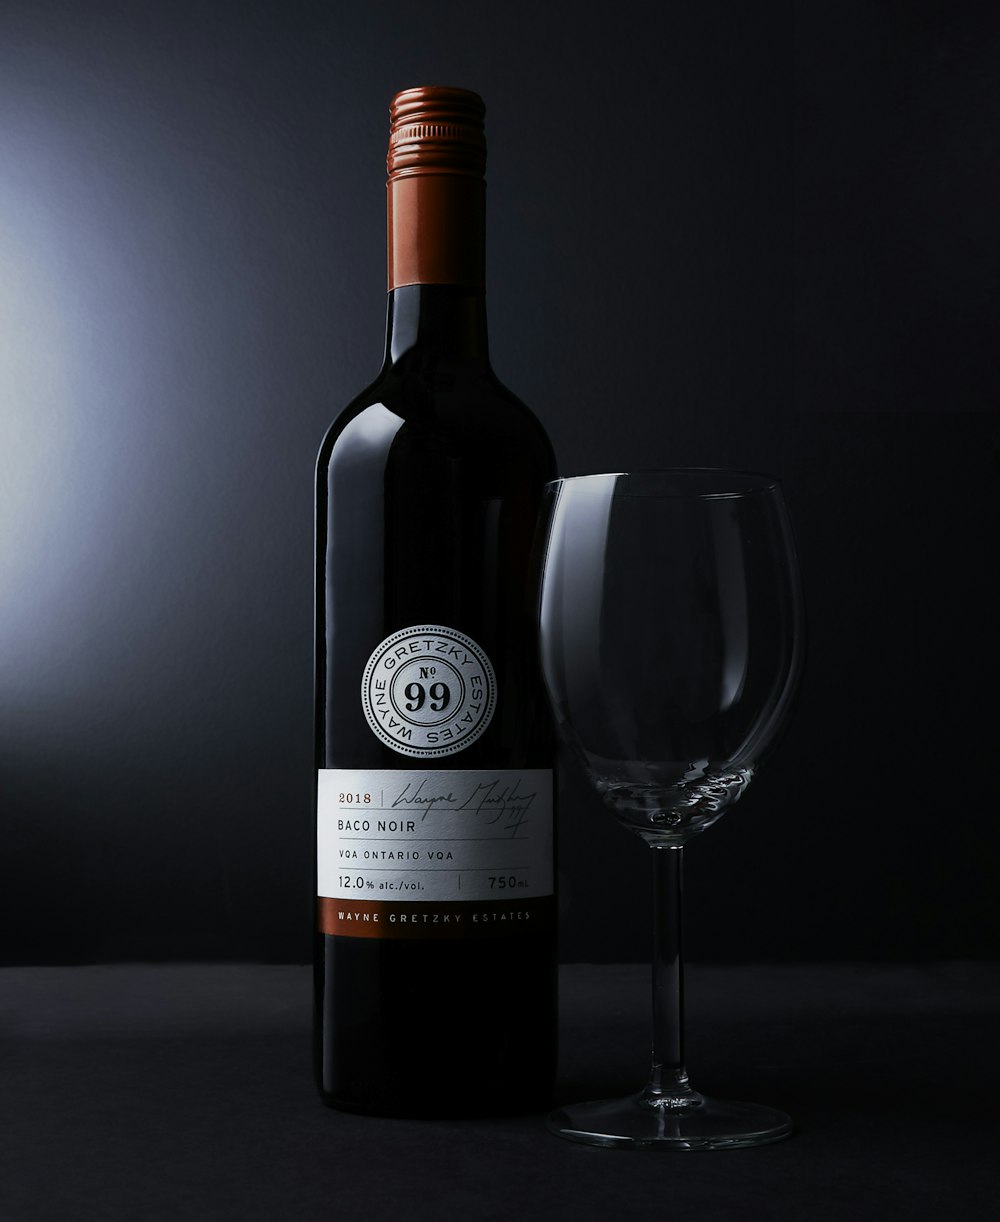 Botella de etiqueta blanca junto a copa de vino transparente